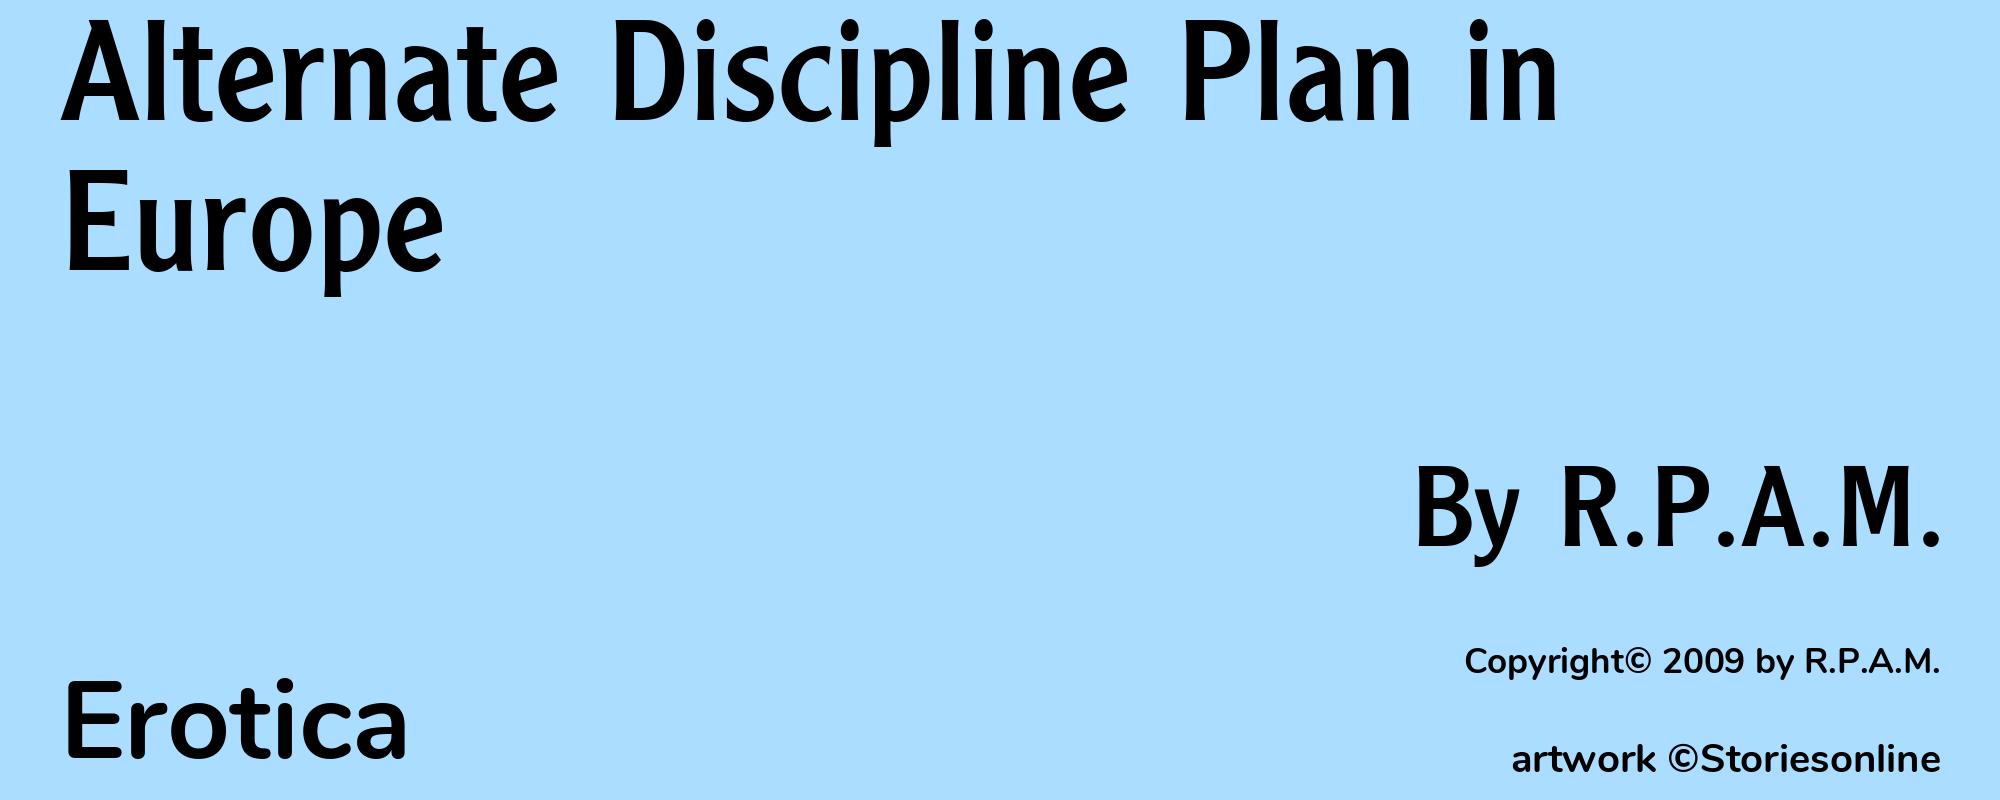 Alternate Discipline Plan in Europe - Cover